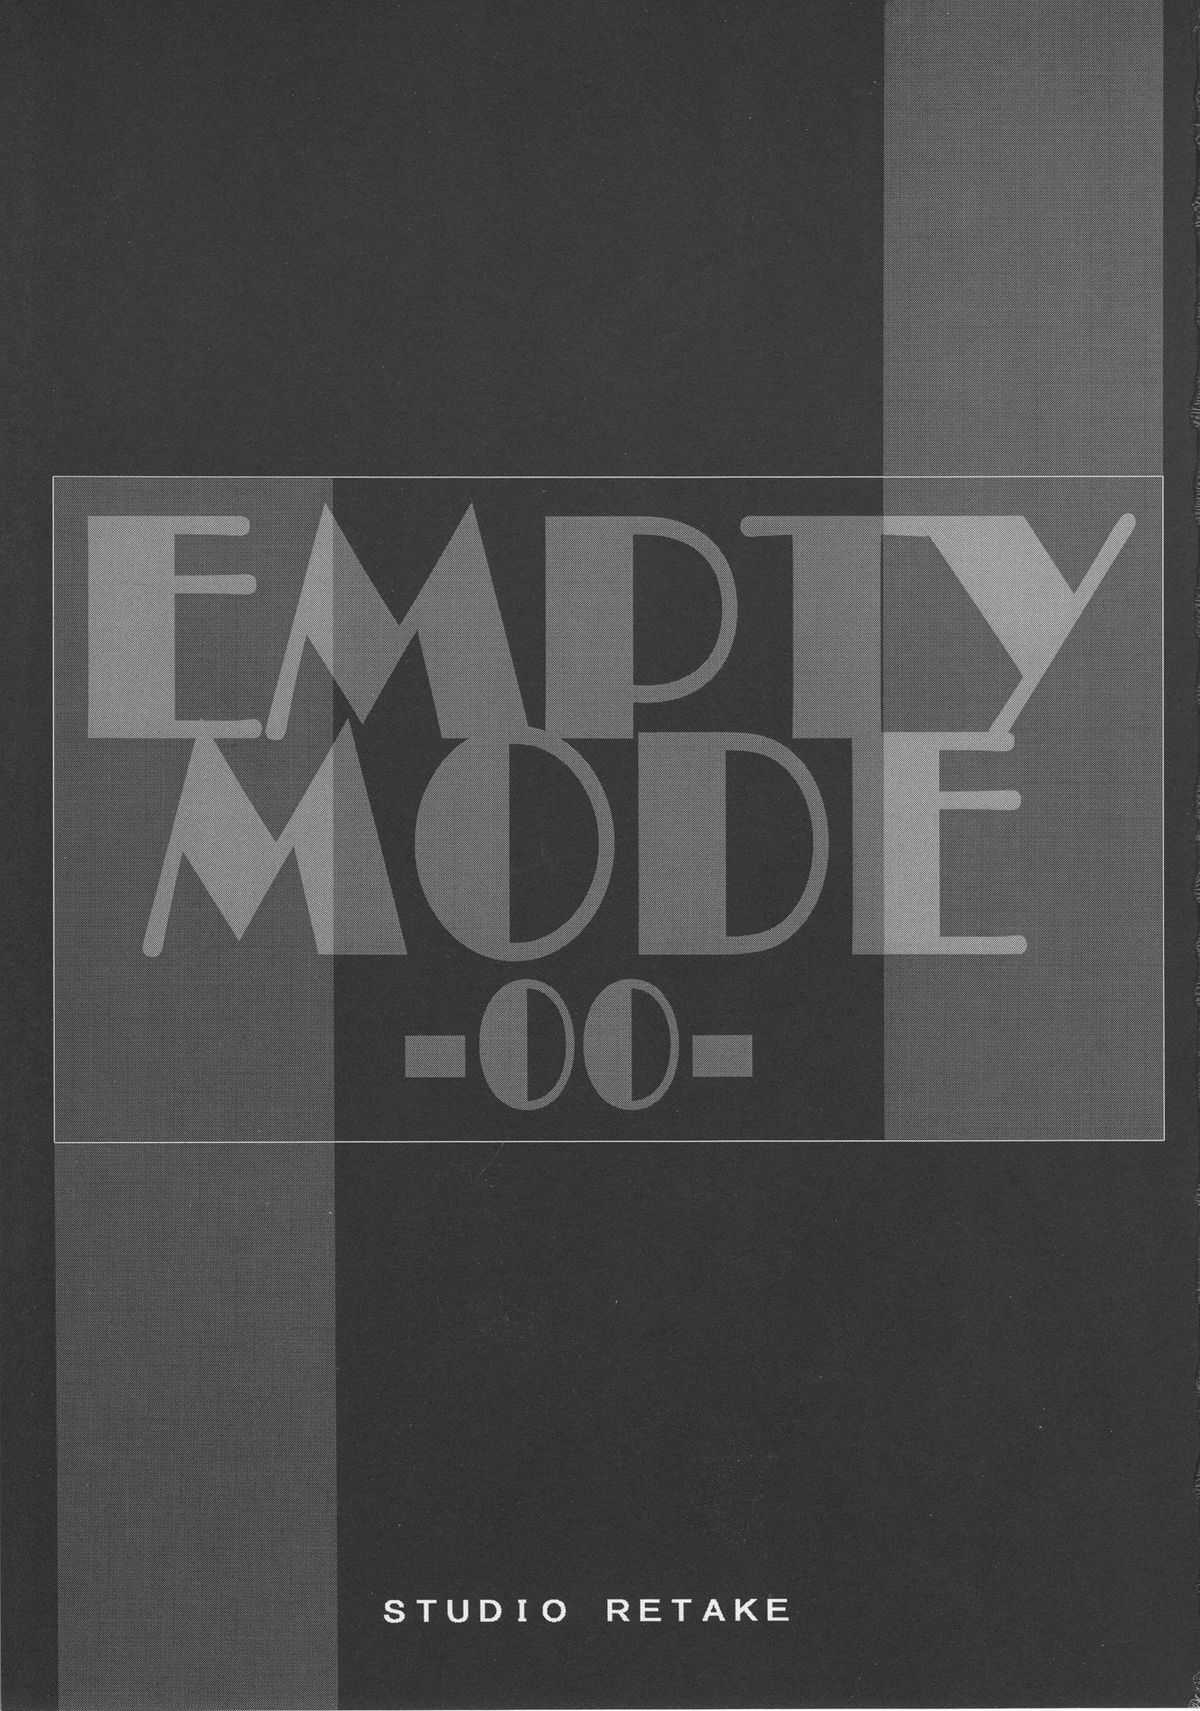 [Studio Retake] Empty Mode -00- 